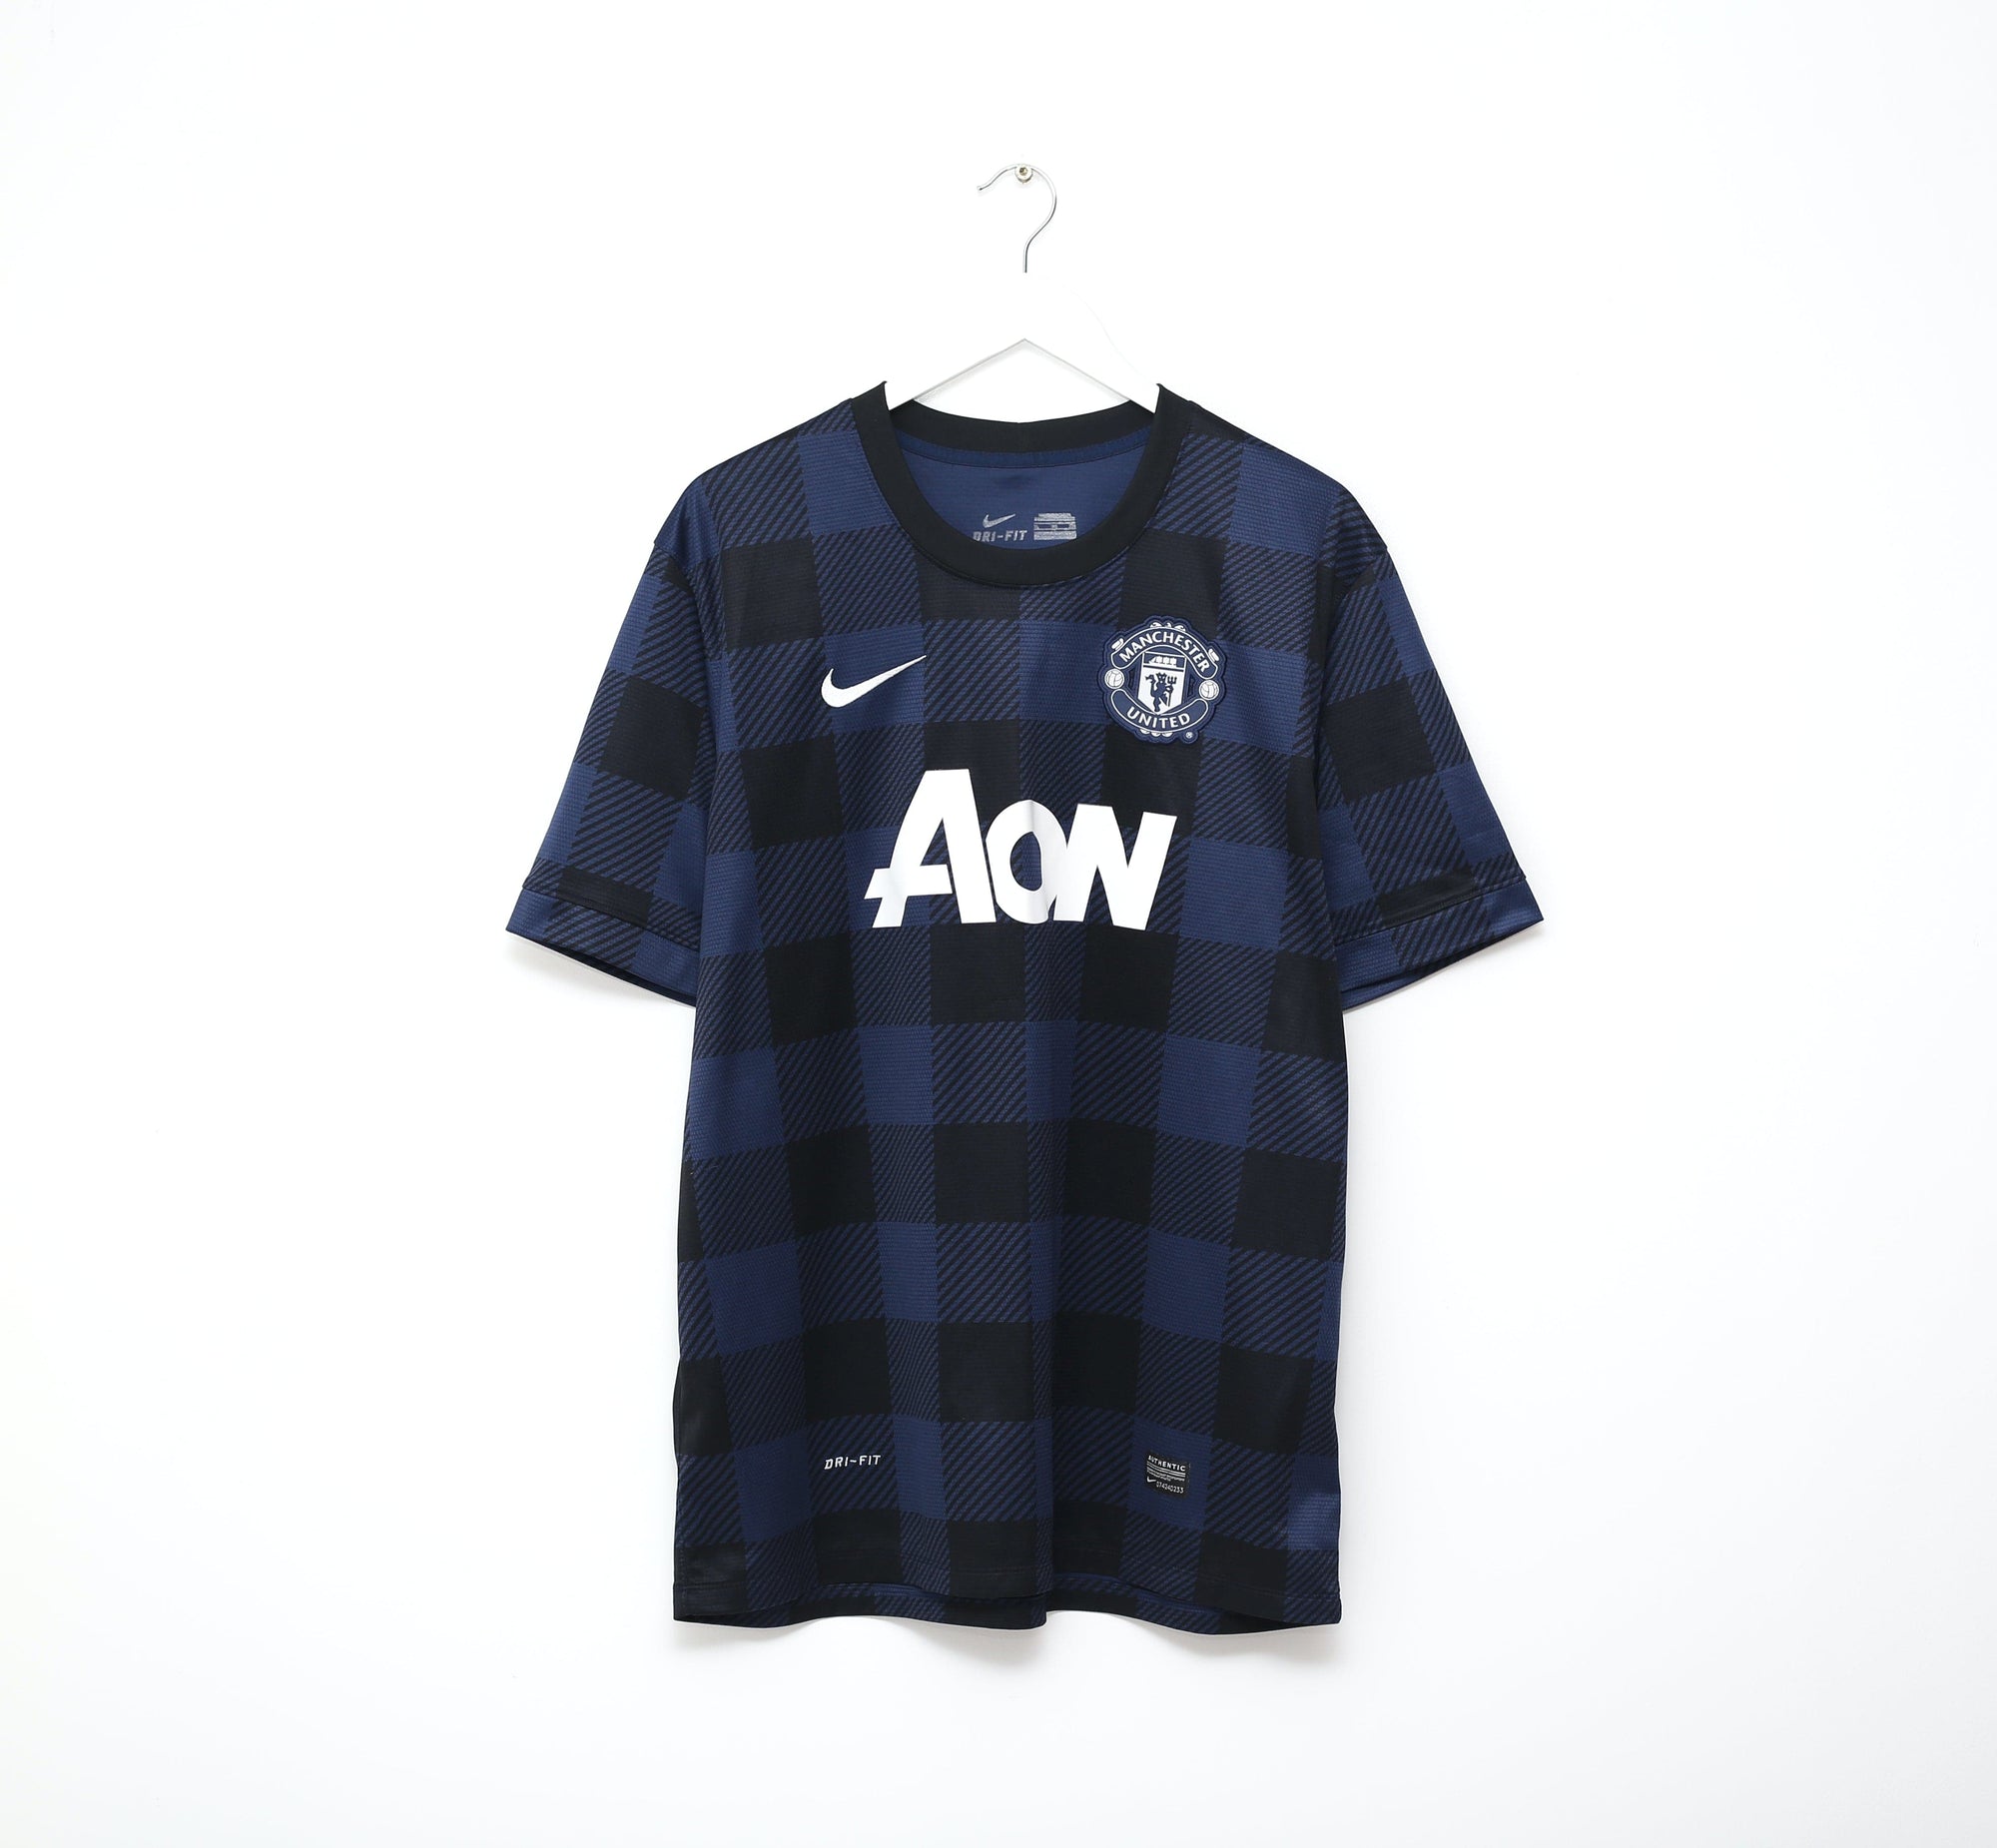 2013/14 VAN PERSIE #20 Manchester United Vintage Euro Away Football Shirt (XL)